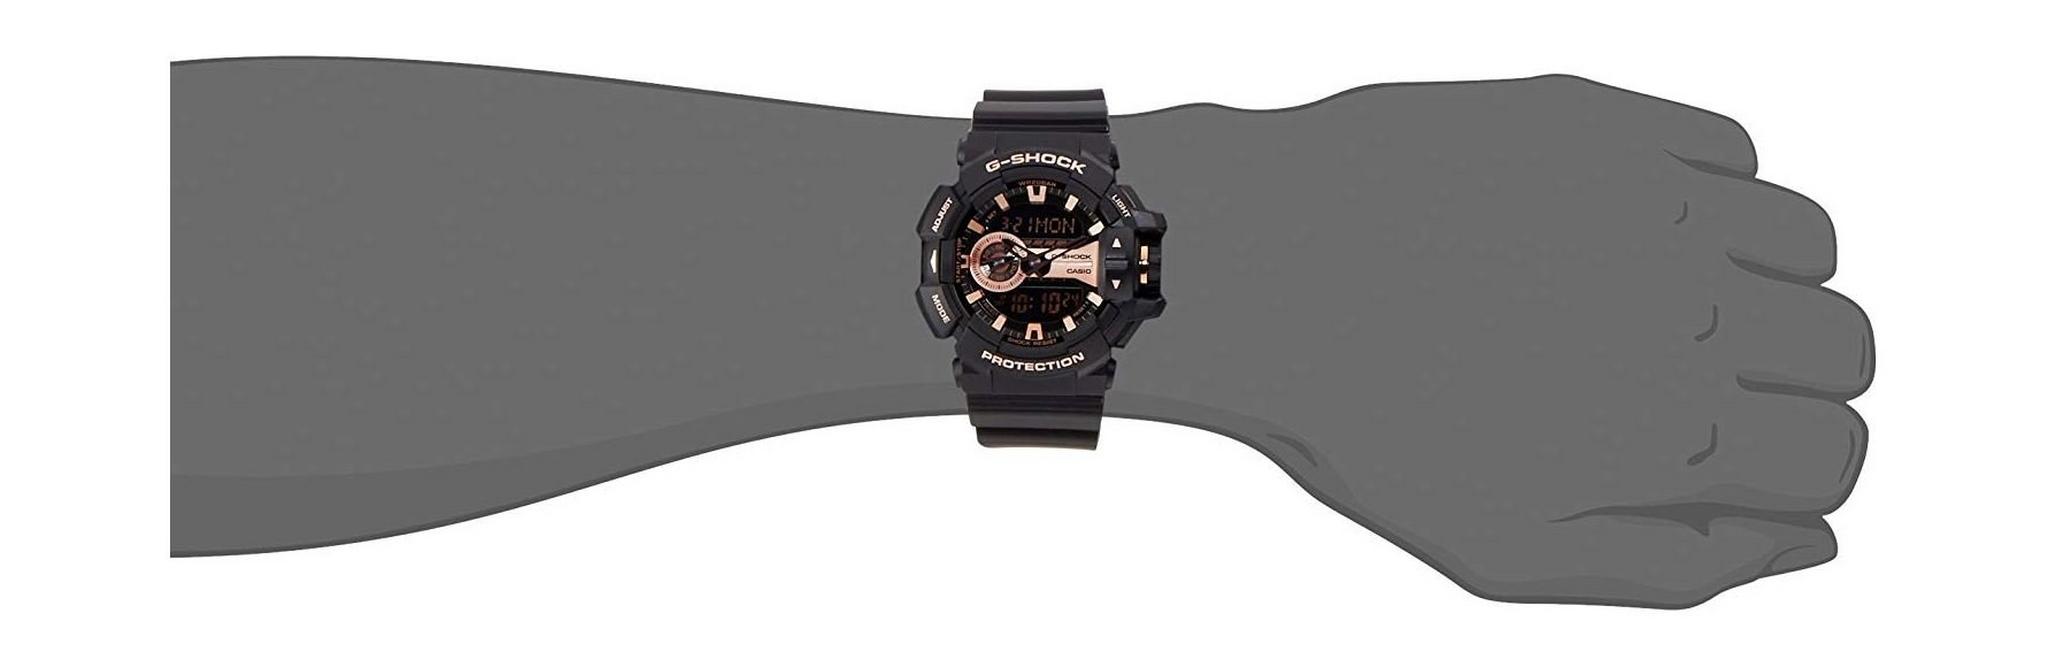 Casio G-Shock Black Band Men's Sport Watch (GA-400GB-1A4DR)